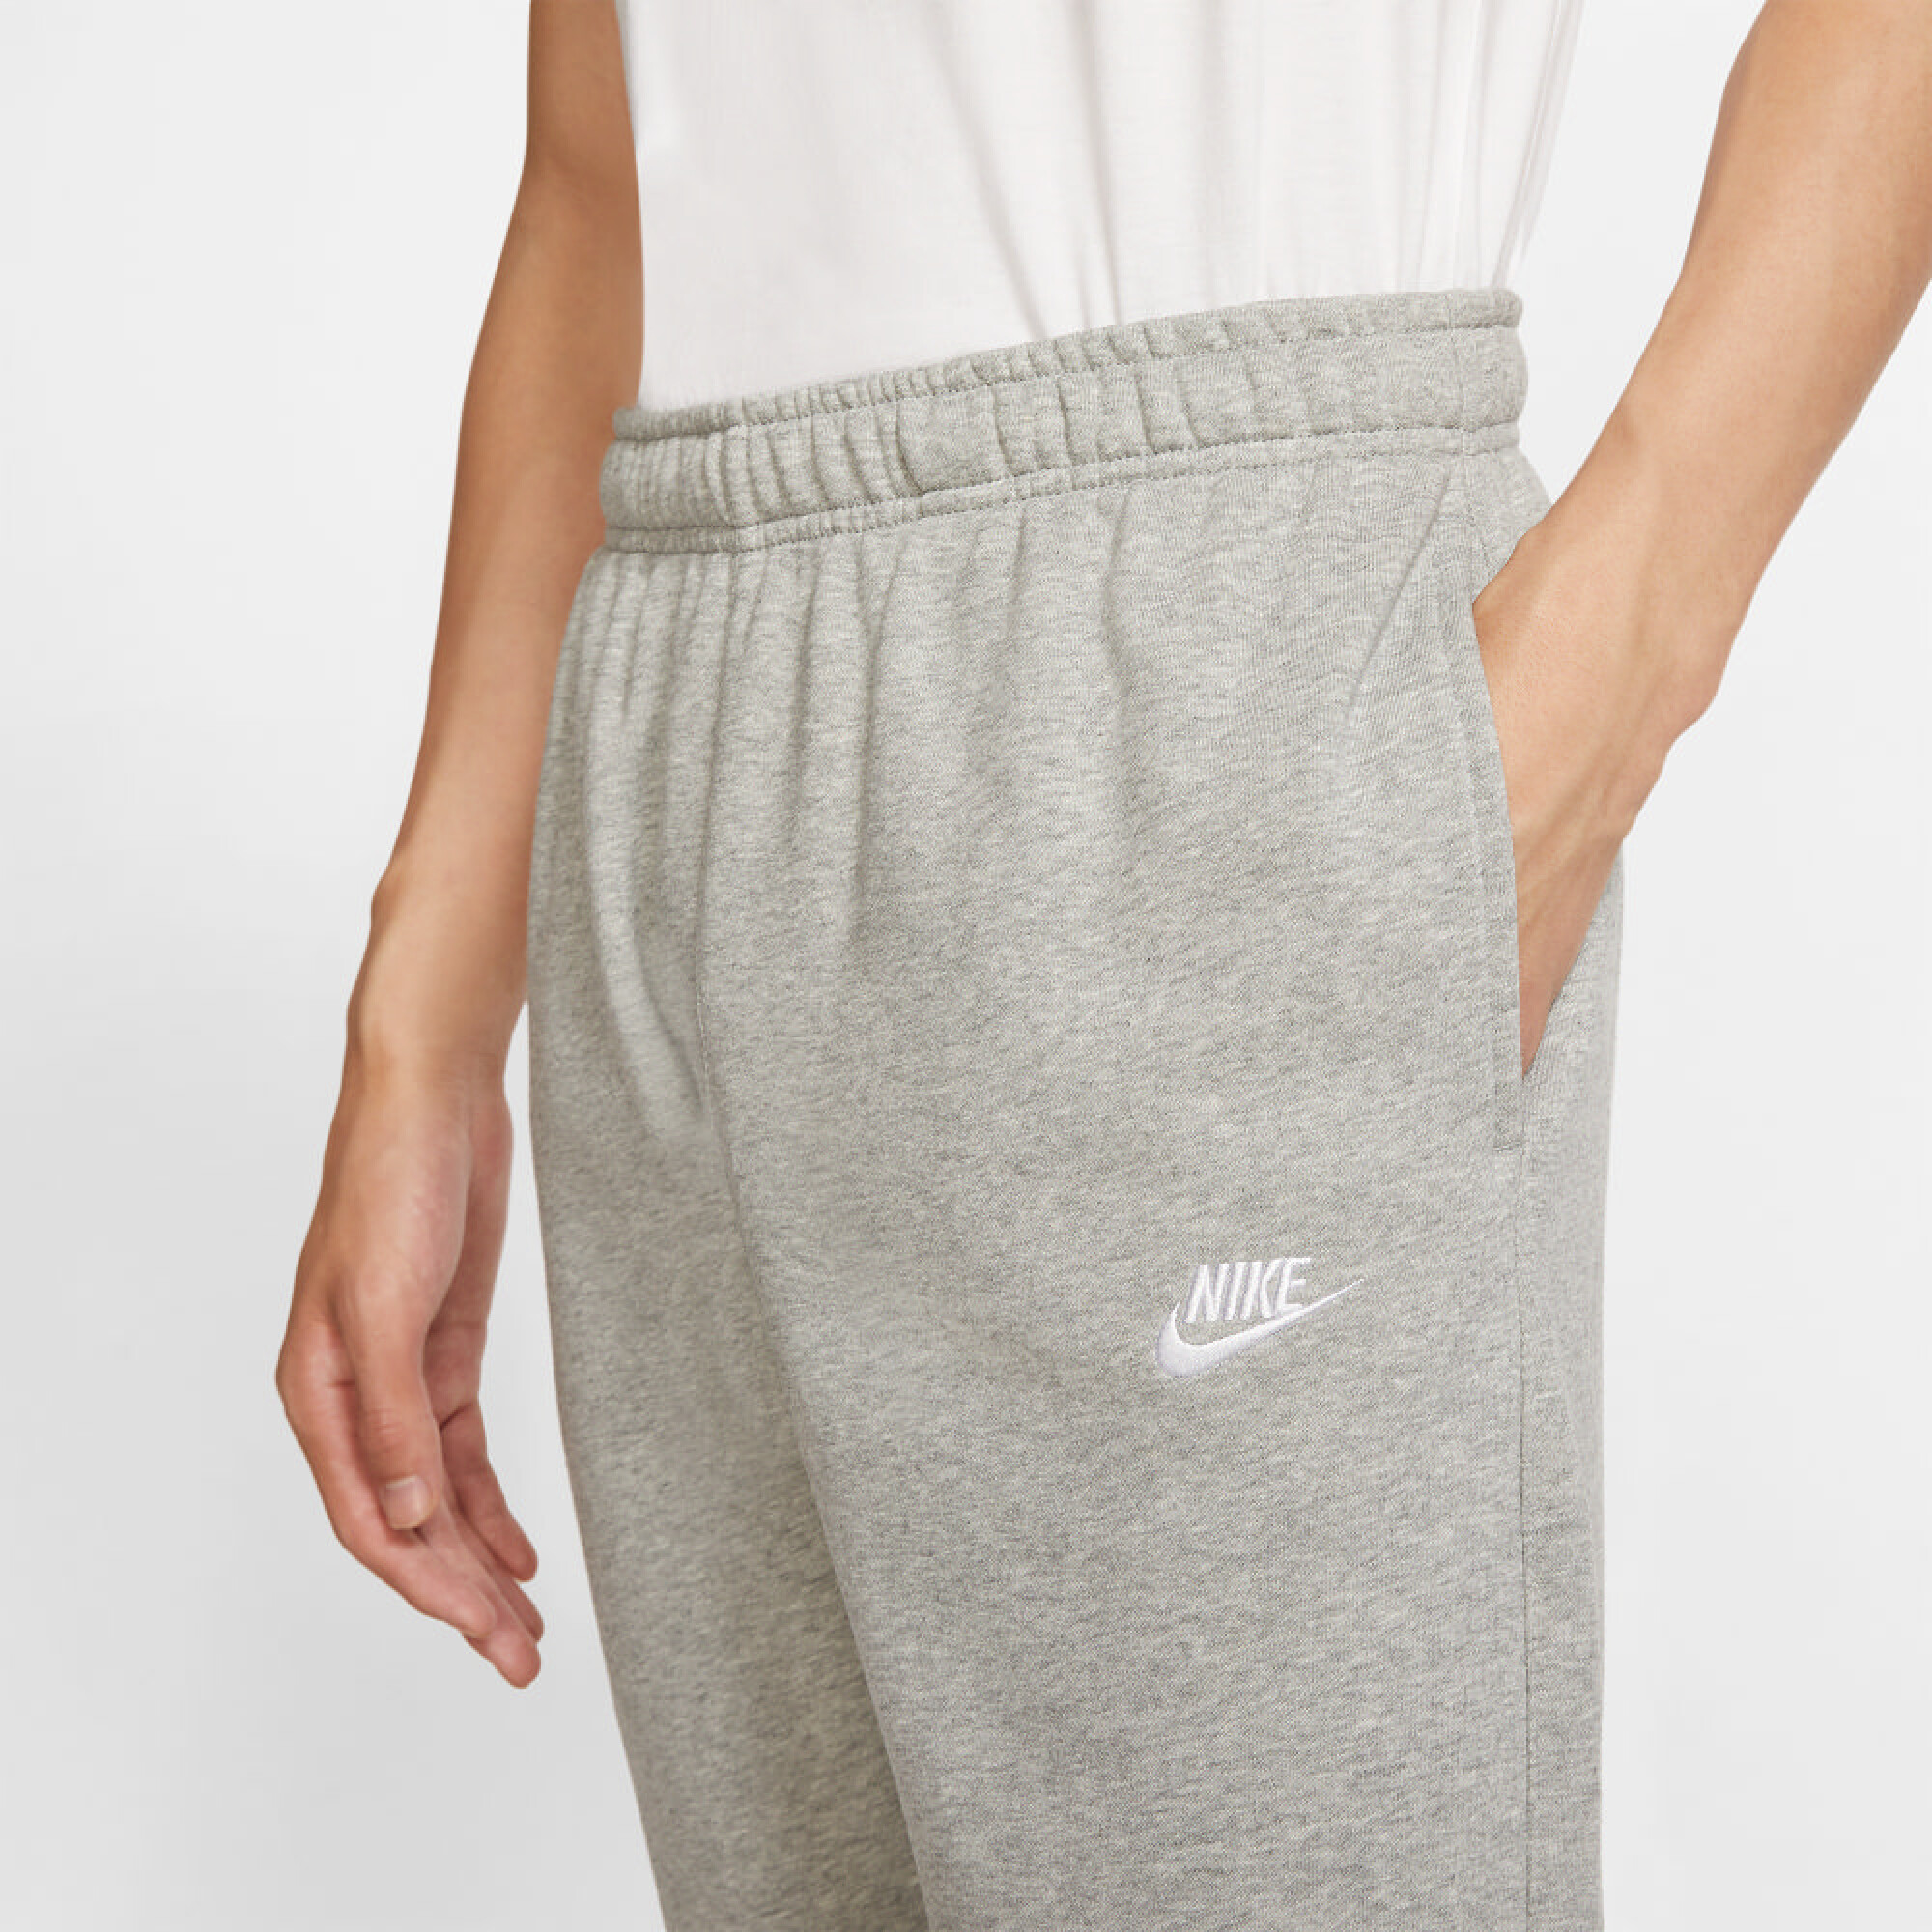 Pantalon jogging Nike Homme - AmChou Boutique - AmChou